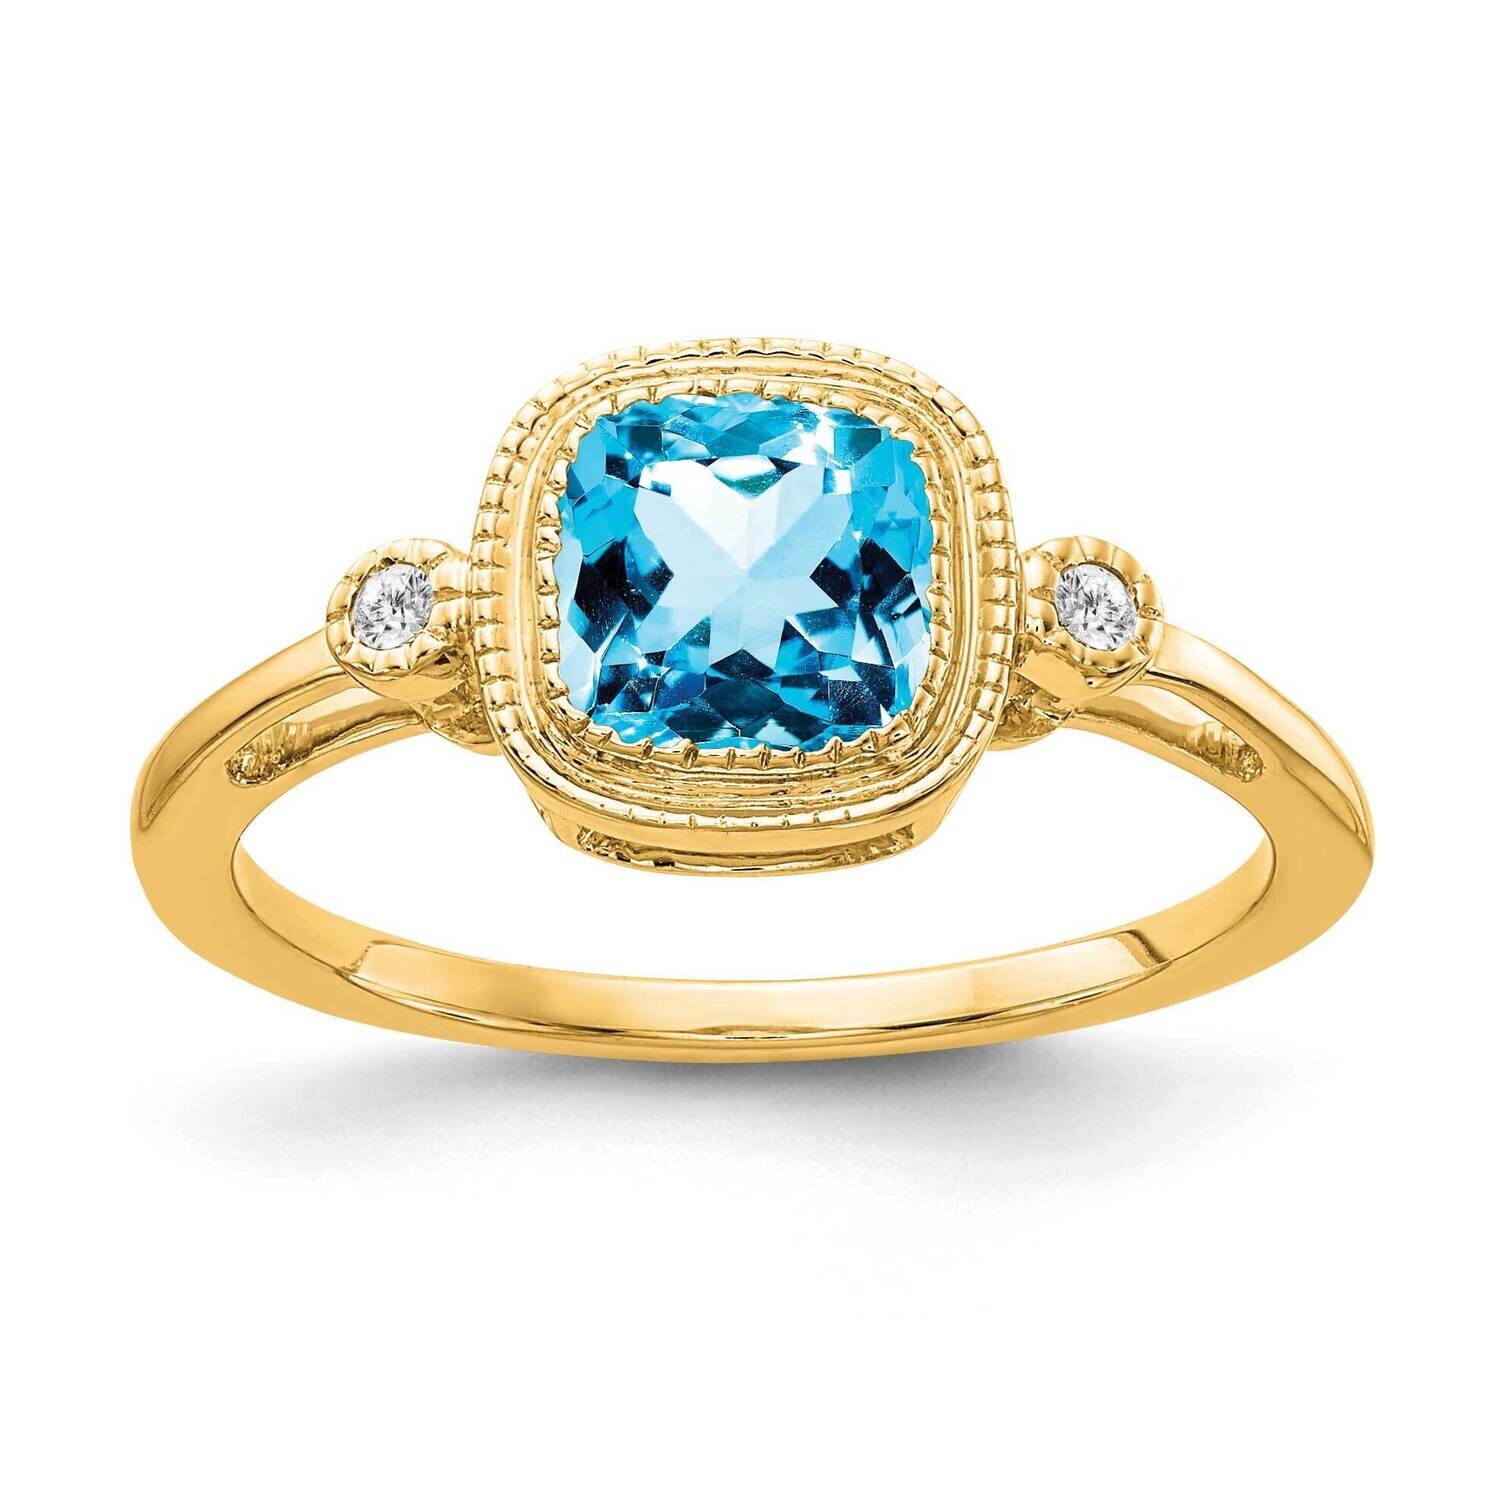 Cushion Blue Topaz Diamond Ring 14k Gold RM3665-BT-003-YA